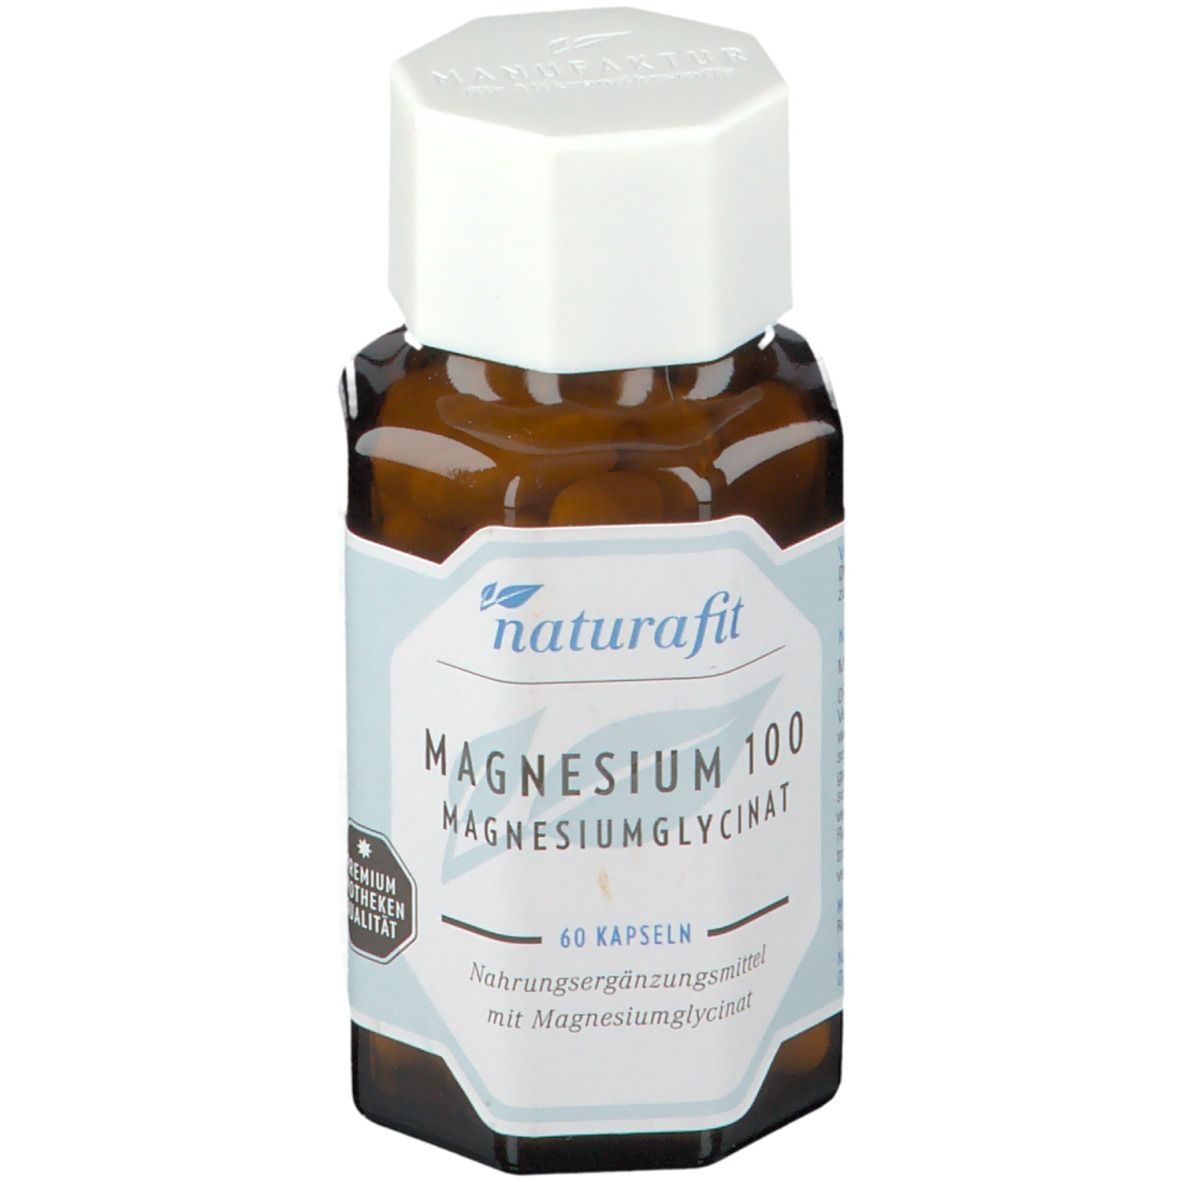 naturafit Magnesium100 mg Magnesiumglycinate